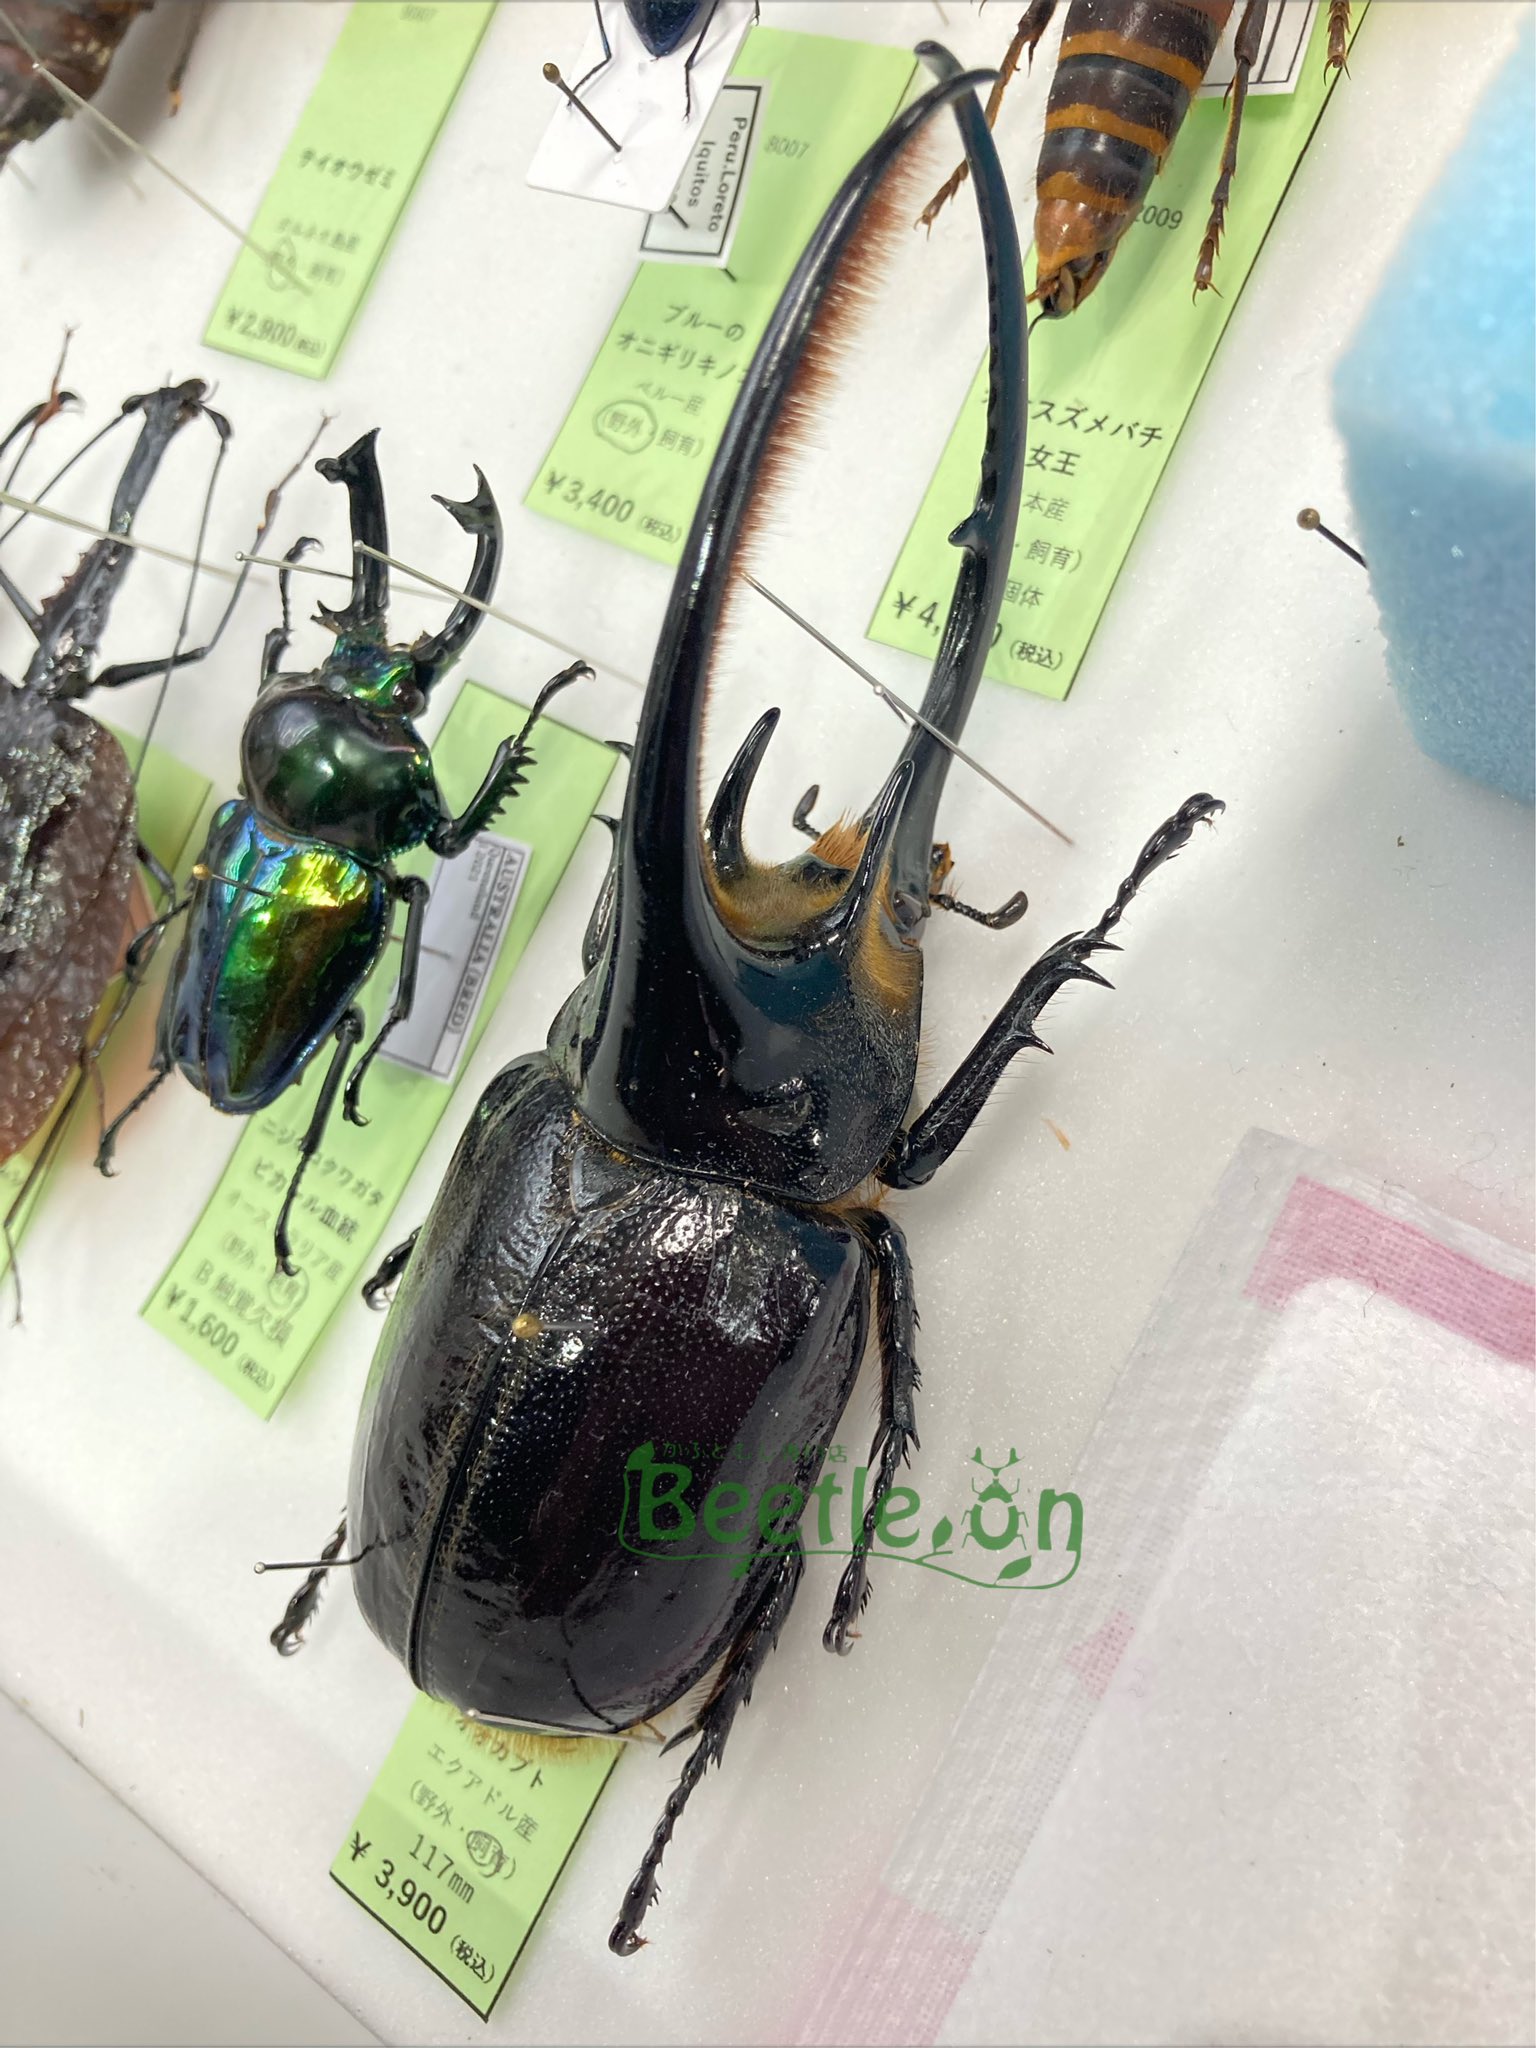 Beetle on（ビートロン）東京店 標本販売事業部 on X: 